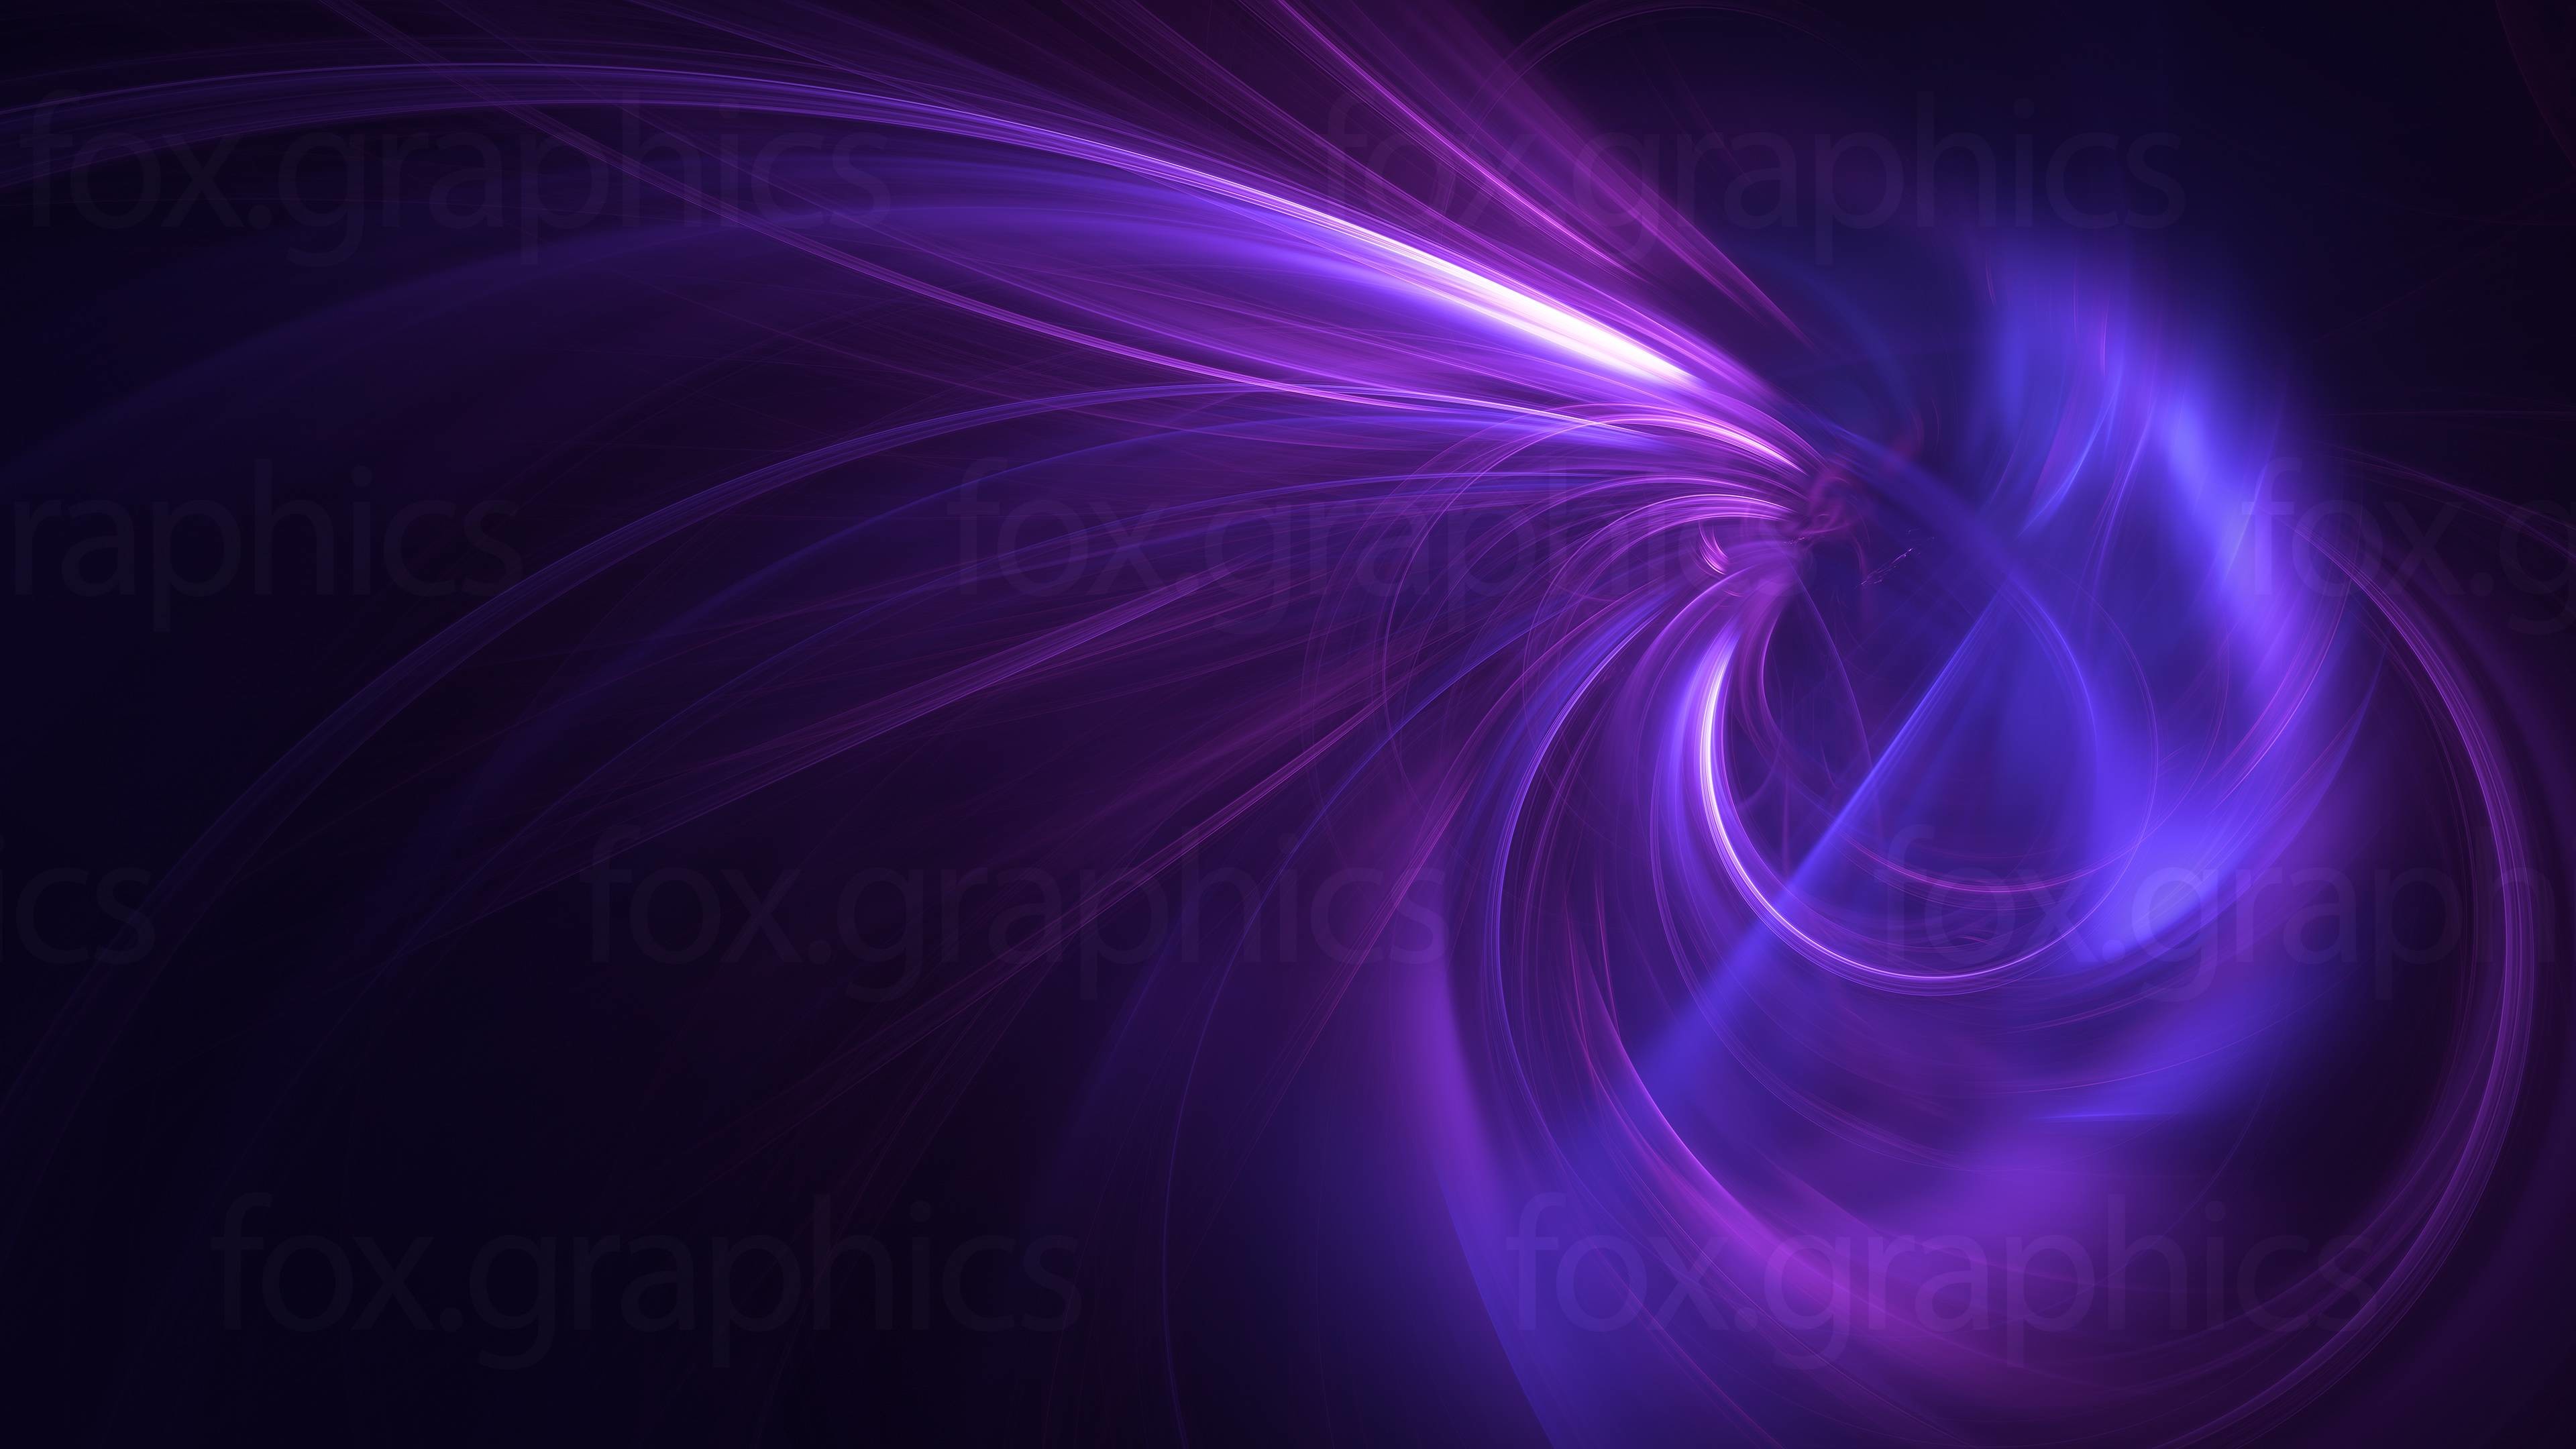 3840x2160 purple swirl background hd #12327